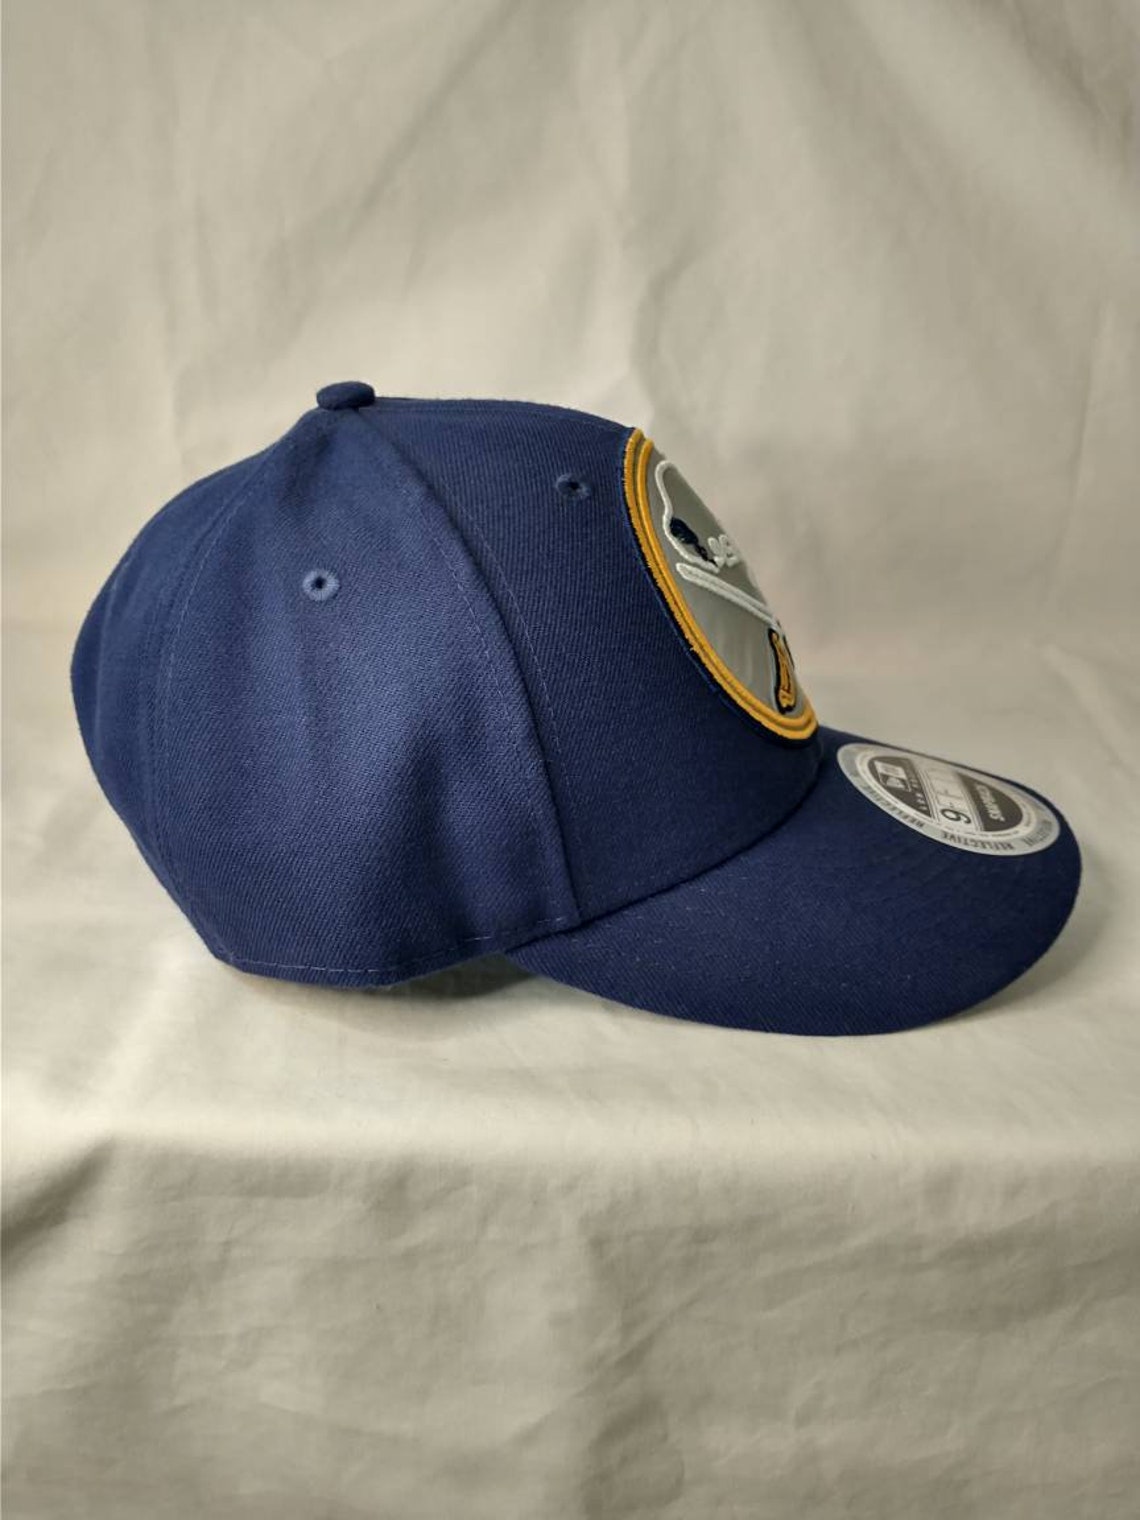 NWT Buffalo Sabres New Era Snapback Hat | Etsy